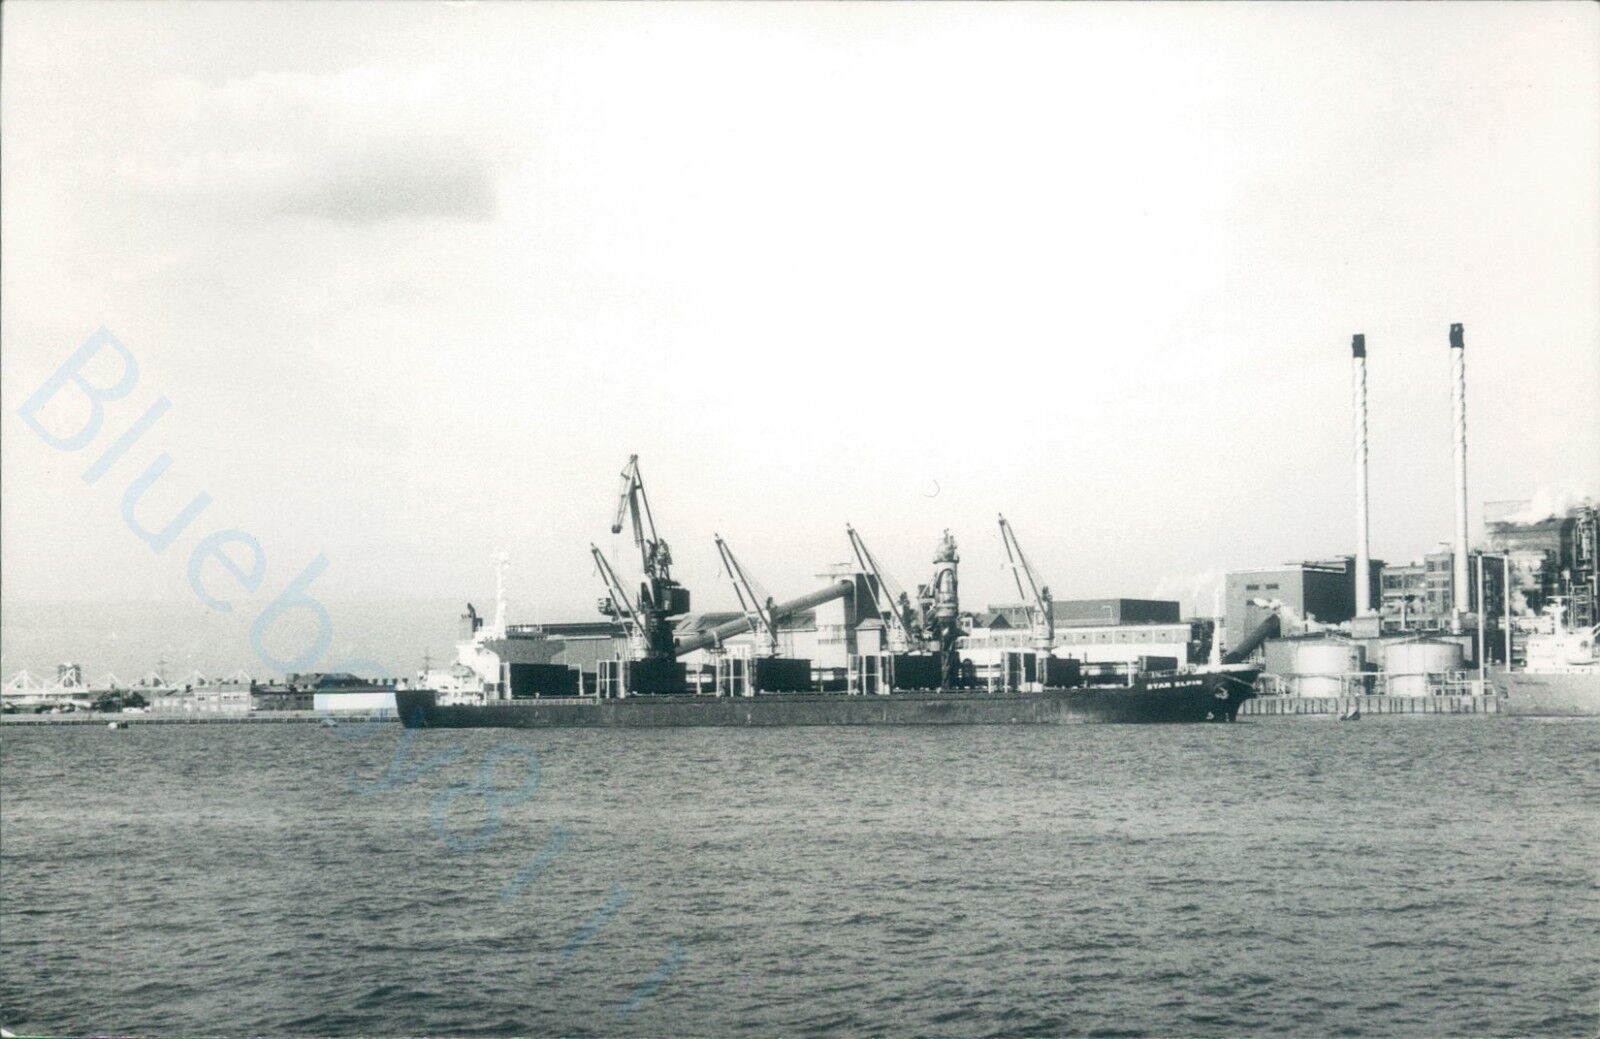 Panamanian MV star Elfin at silvertown 2000 ship photo